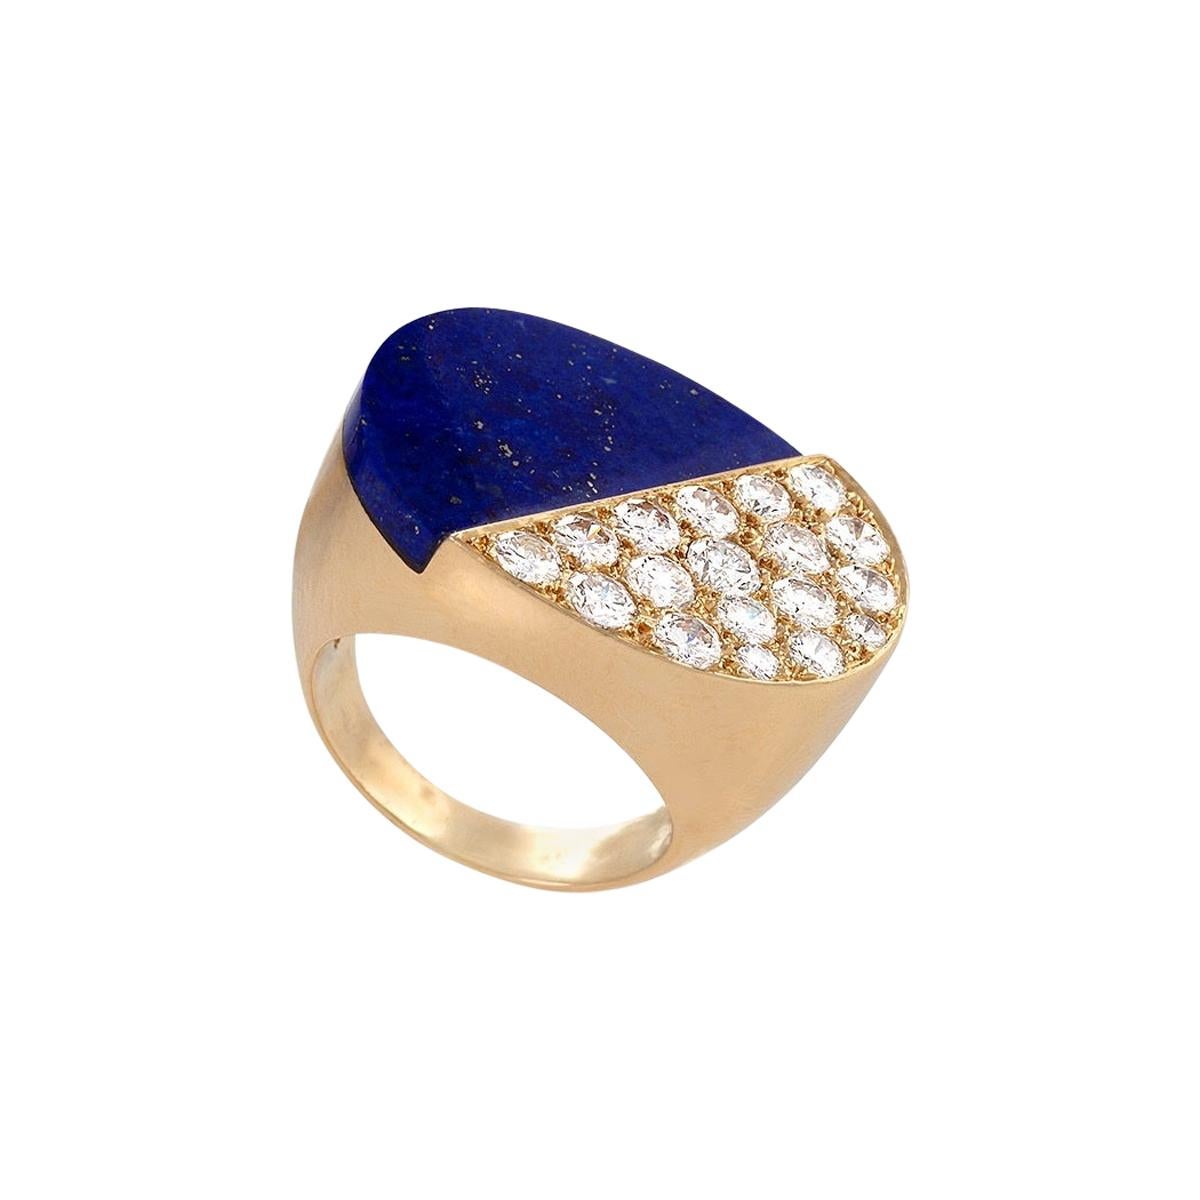 Cartier Gold, Diamond and Lapis Lazuli Cocktail Ring